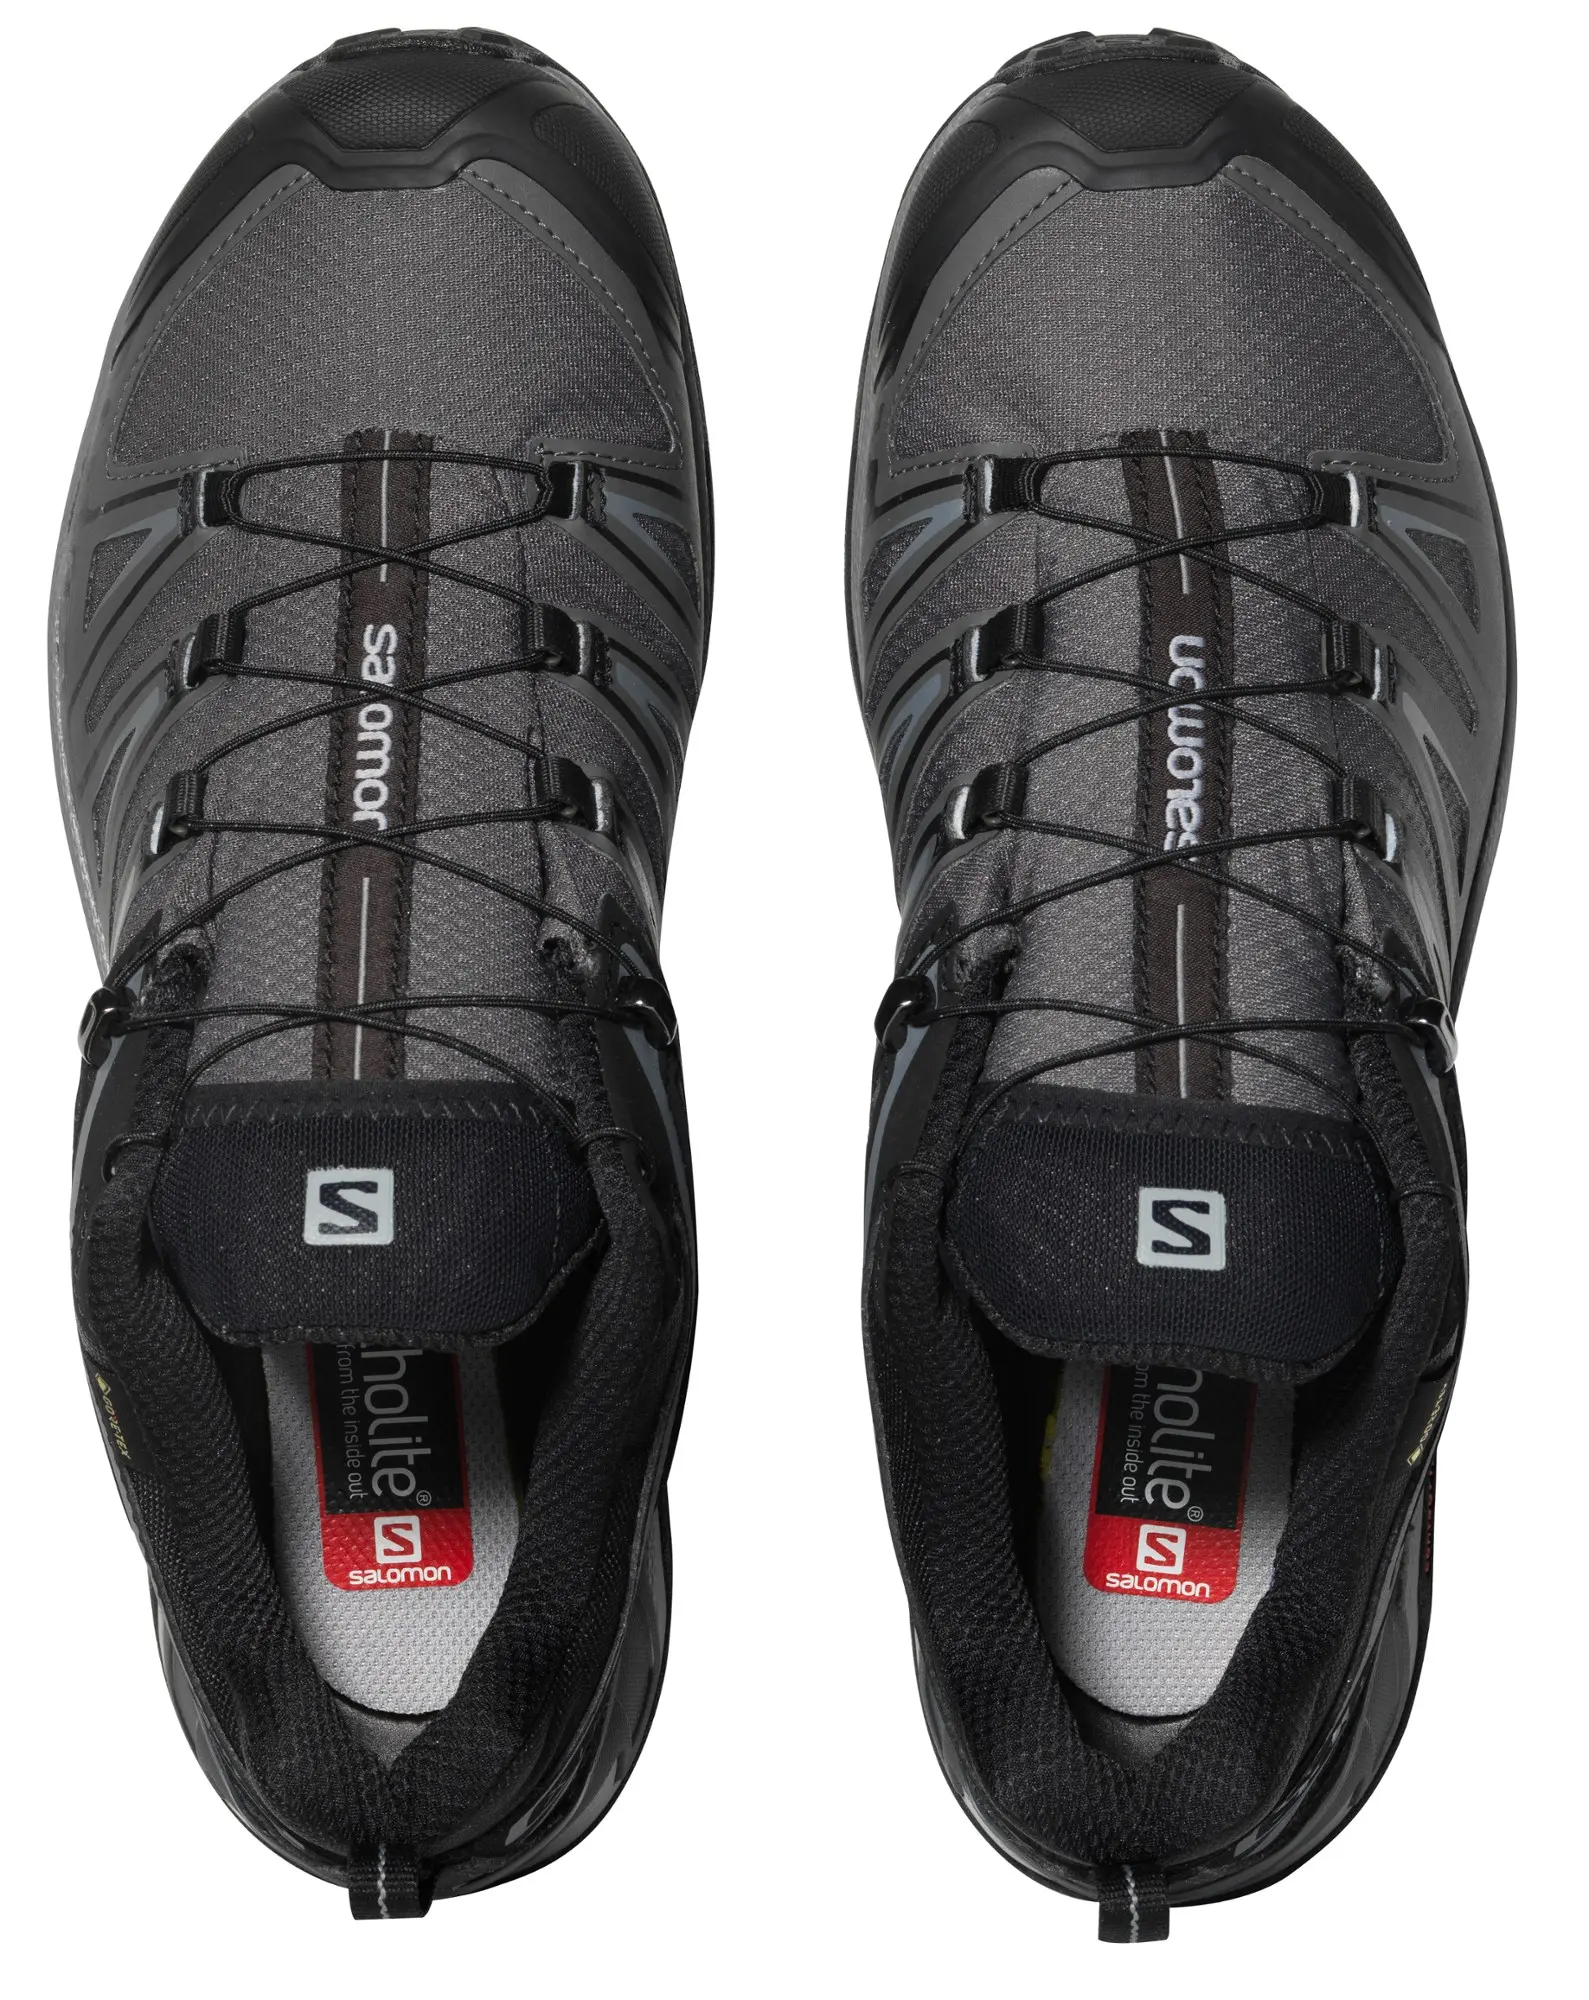 Item 823213 - Salomon Ultra 3 GTX - Men's Hiking Boots - Size